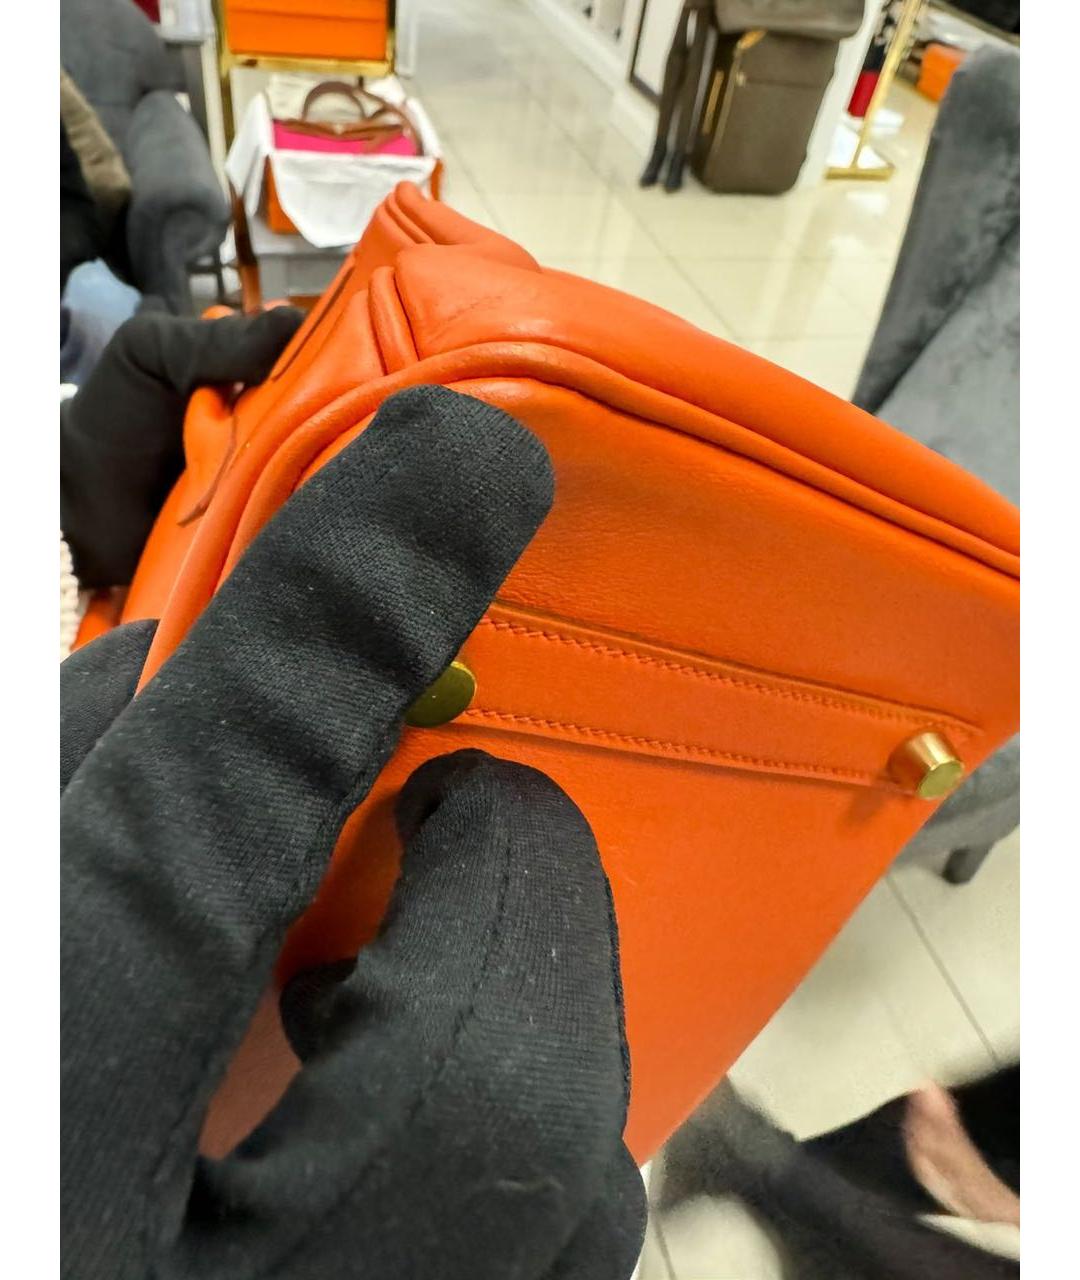 HERMES PRE-OWNED Оранжевая кожаная сумка с короткими ручками, фото 7